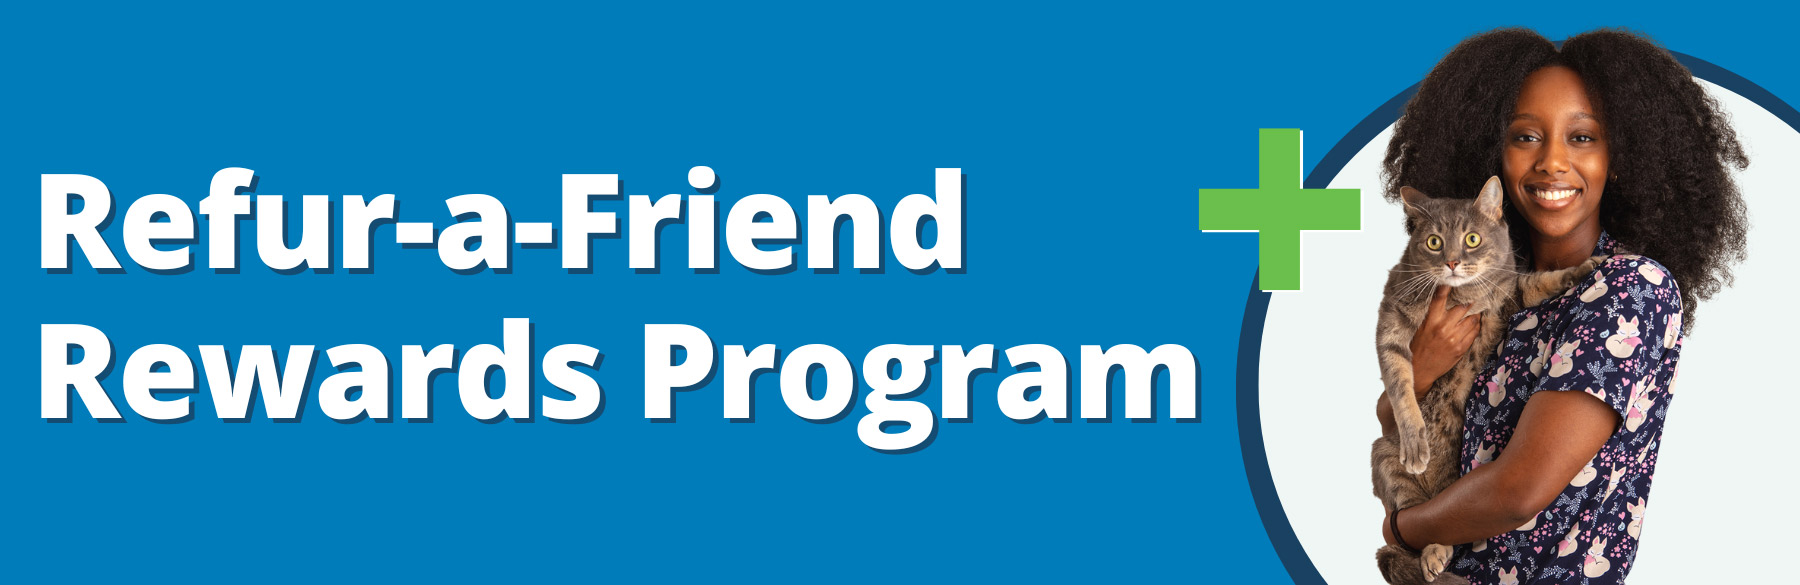 Refur-a-Friend Rewards Program